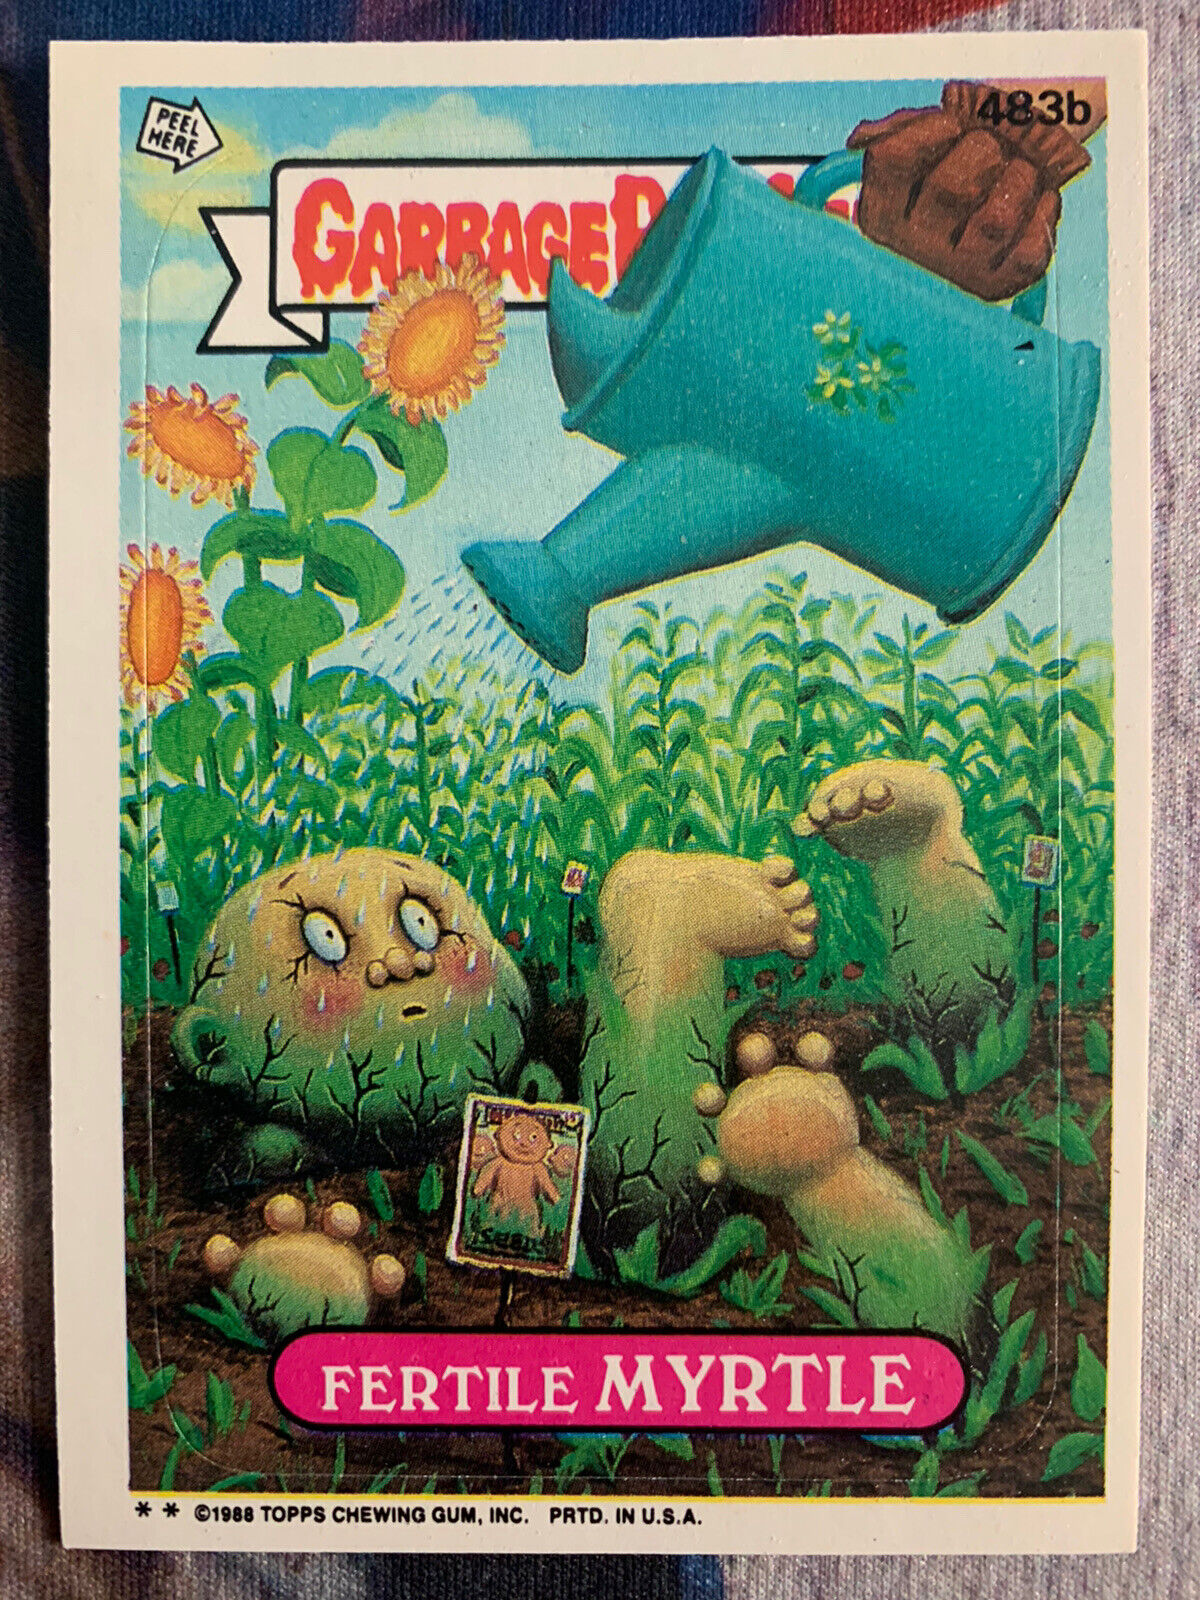 Garbage Pail Kids OS12 GPK Original 12th Series Fertile Myrtle Card 483b